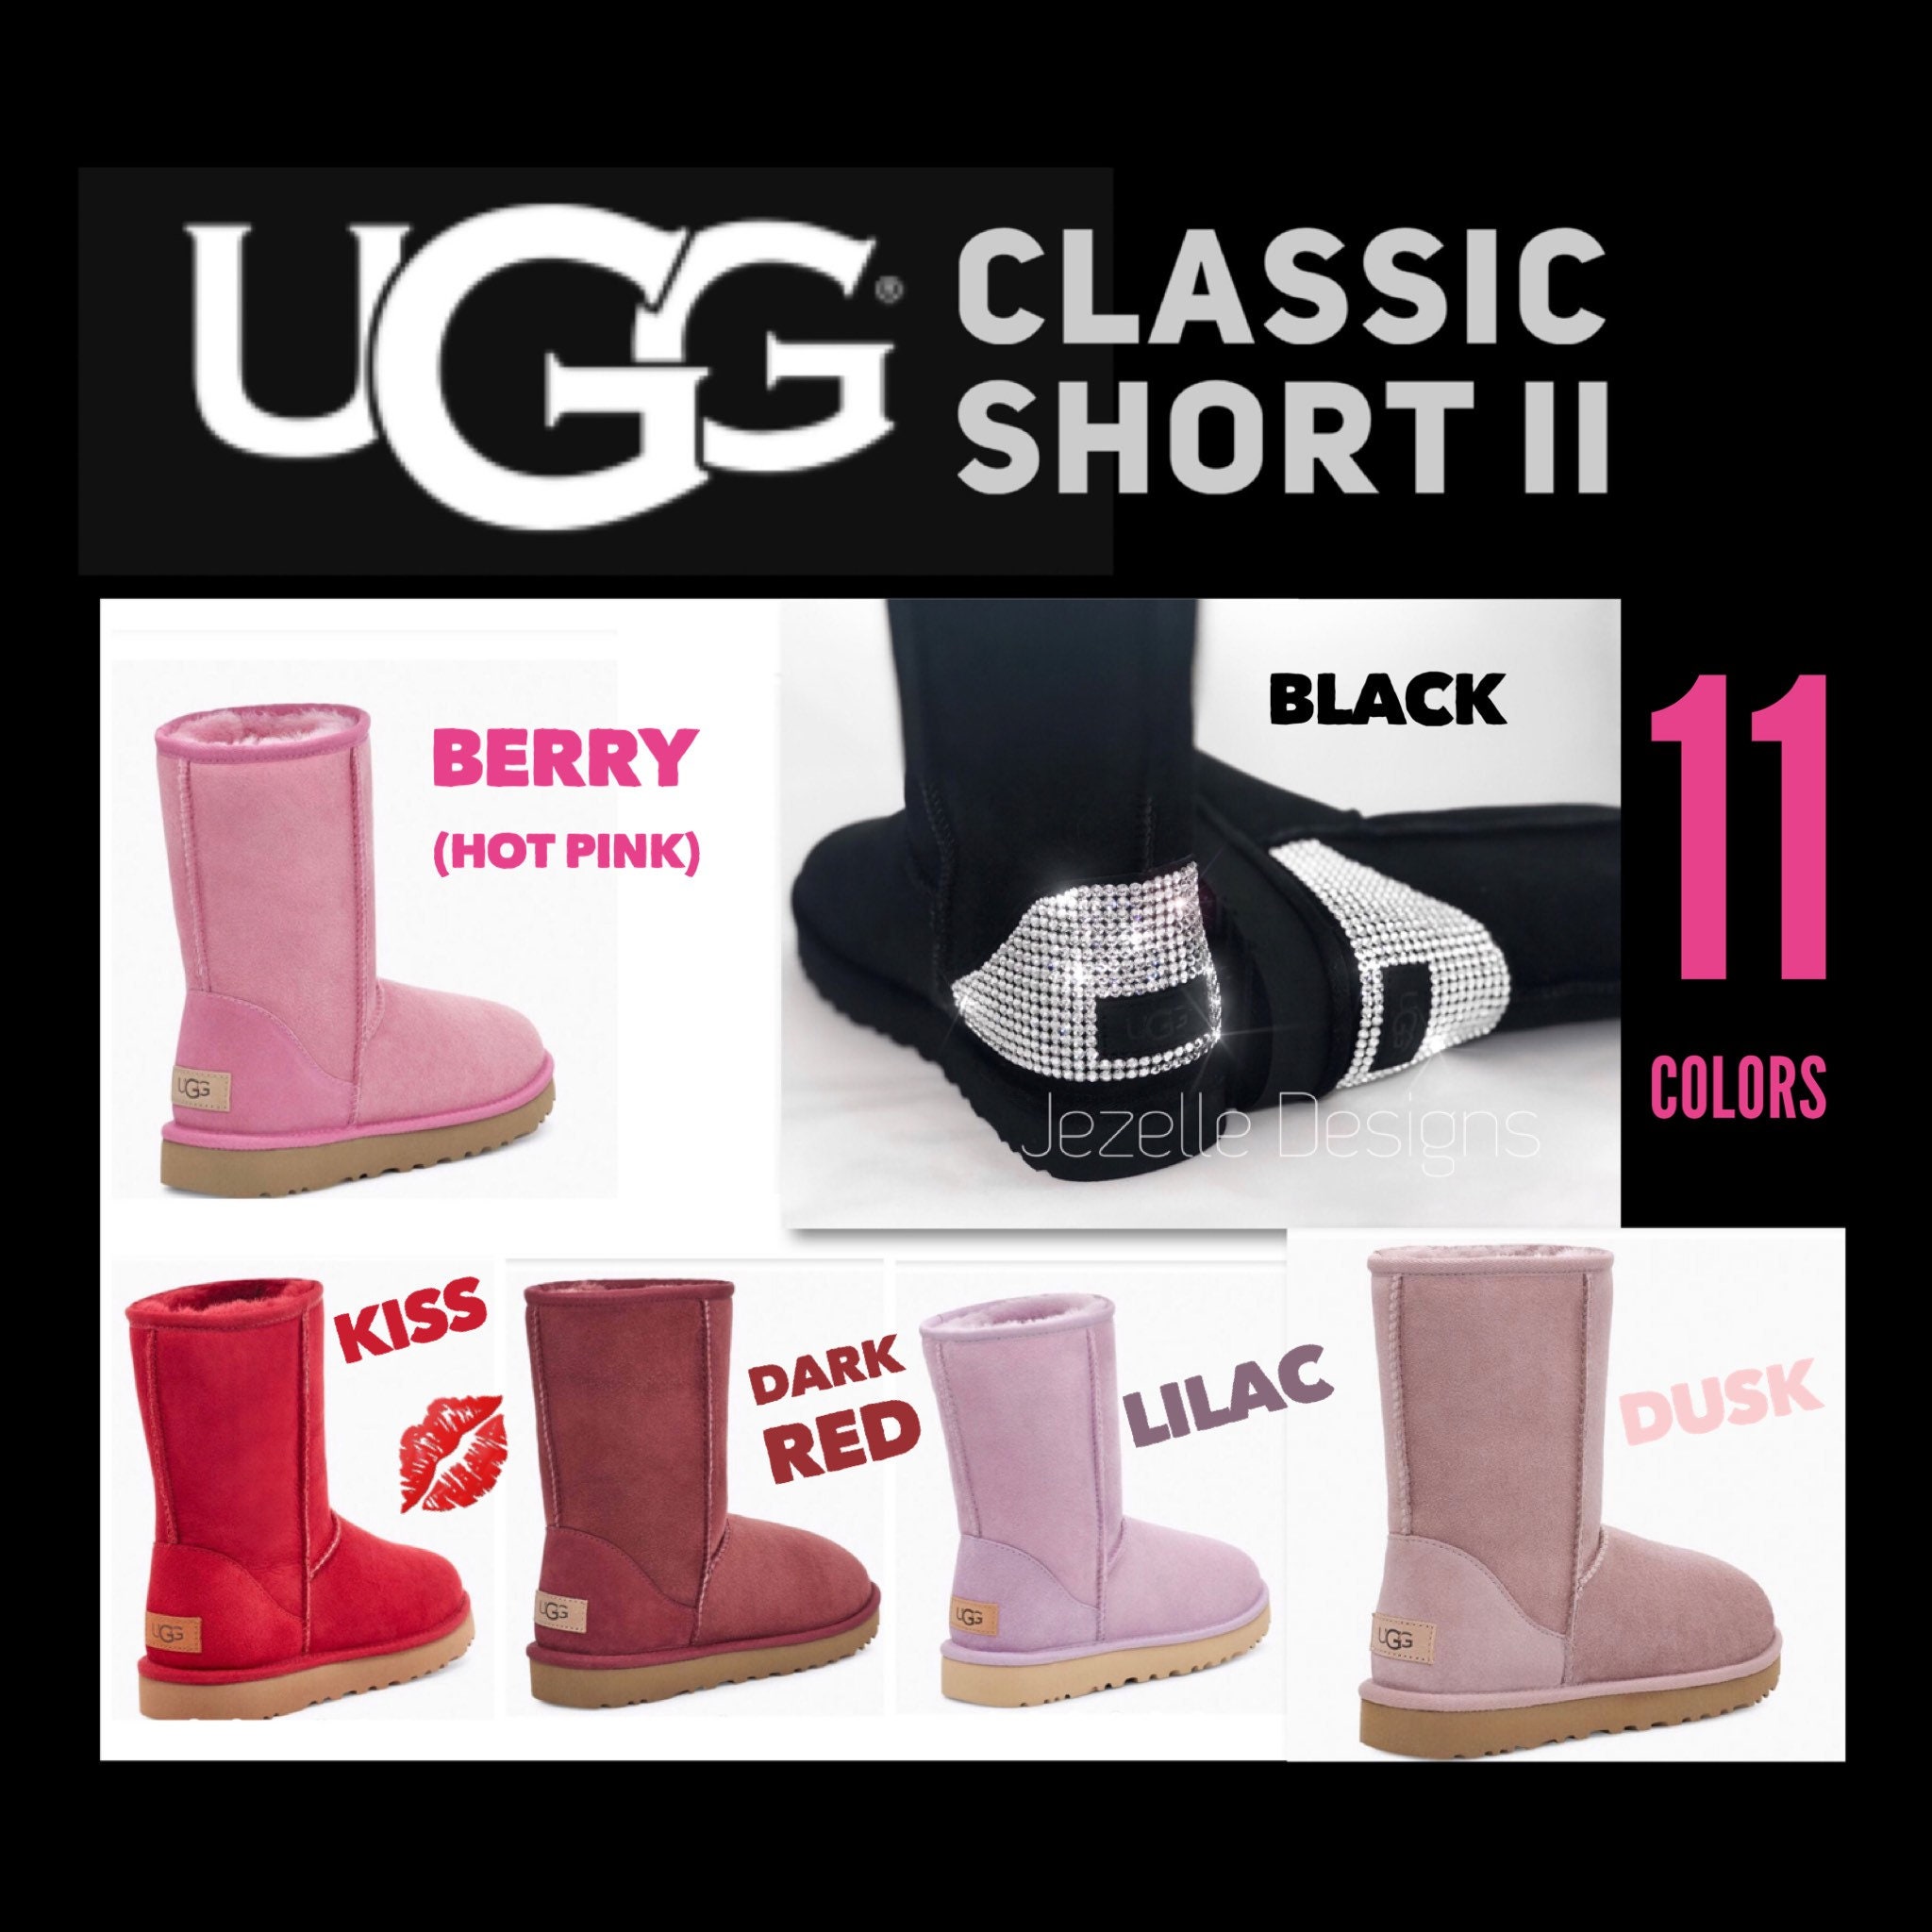 Ultra-Premium Crystal VGK Classic Short II UGG Boots